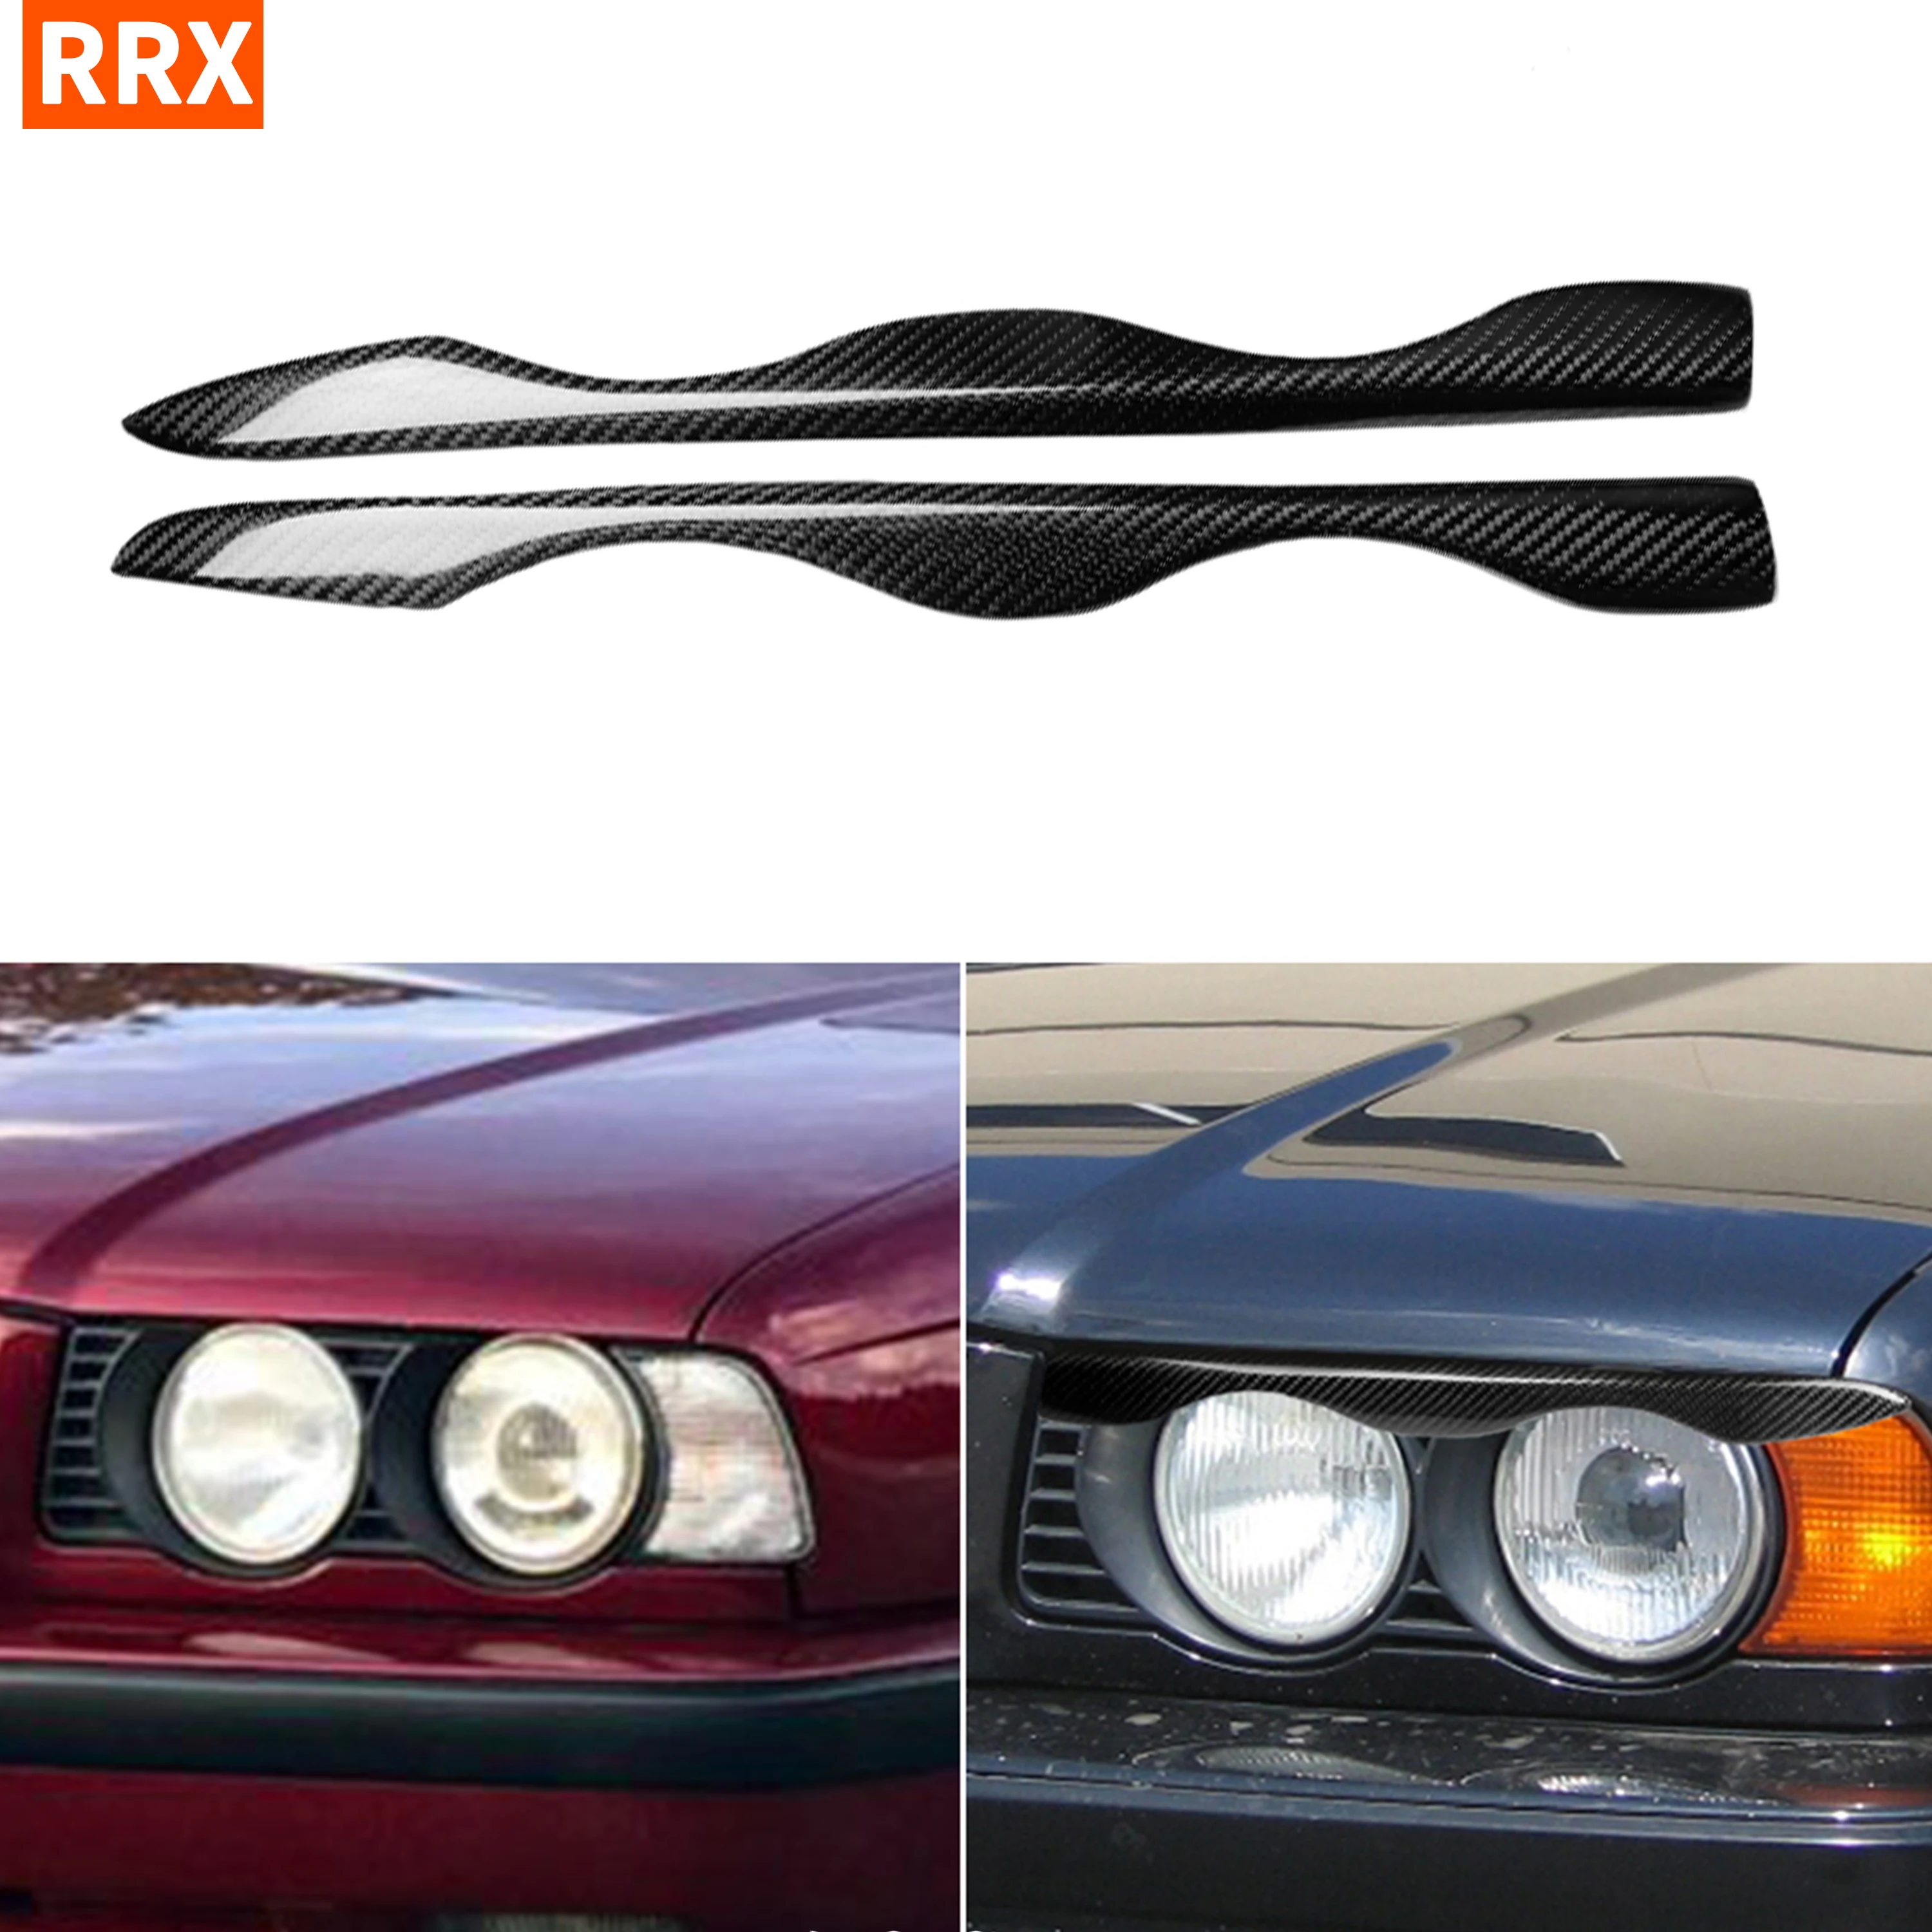 Real Carbon Fiber Car Headlight Eyebrow Eyelids Cover Sticker Headlamp Trim For BMW 5 Series E34 1988-1996 Lampbrow Accessories